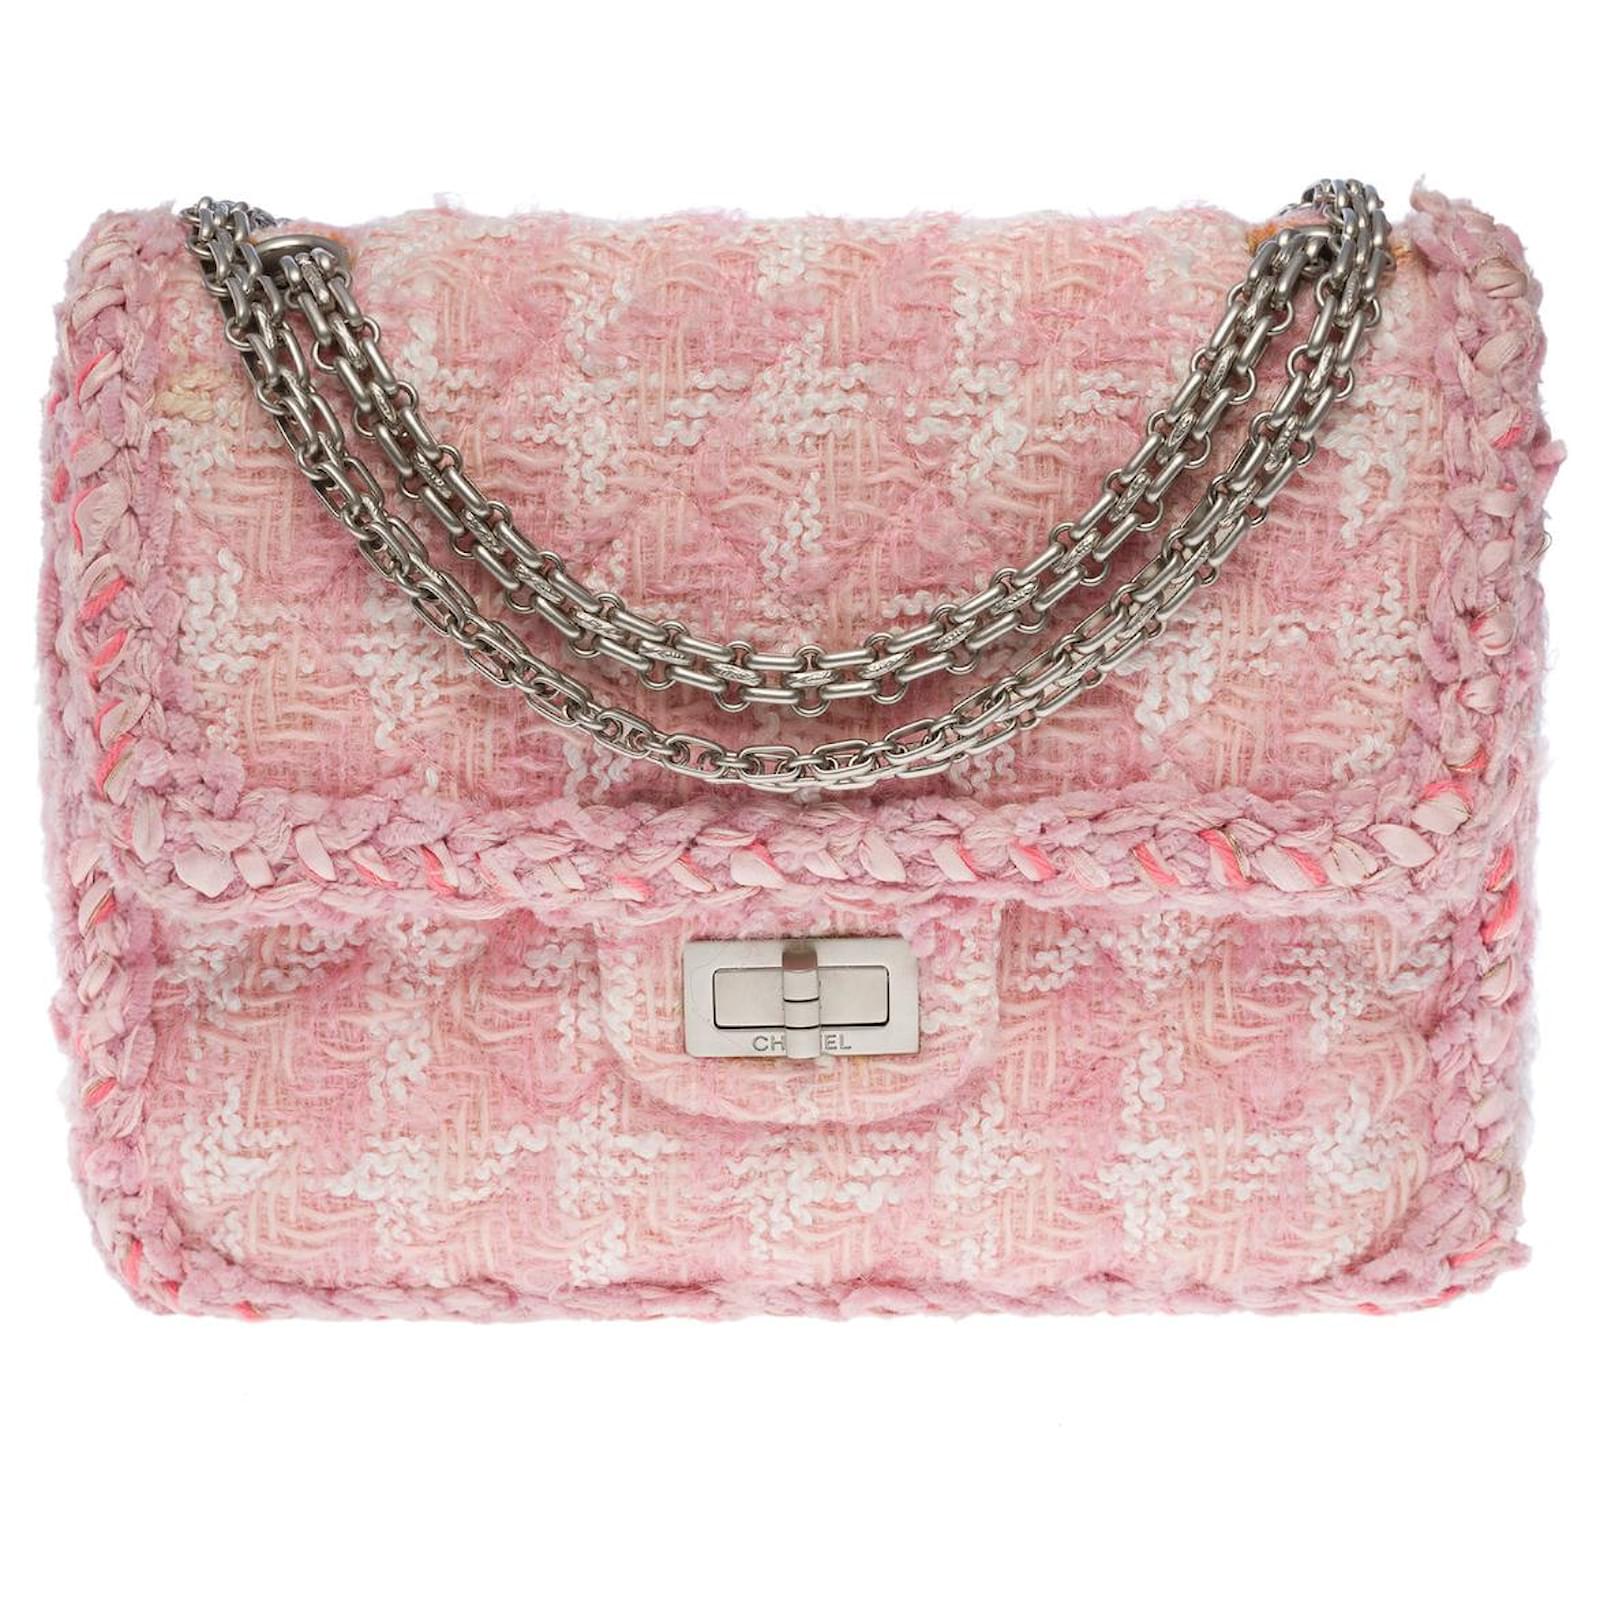 Mademoiselle Chanel shoulder bag 2.55 IN PINK TWEED-100978